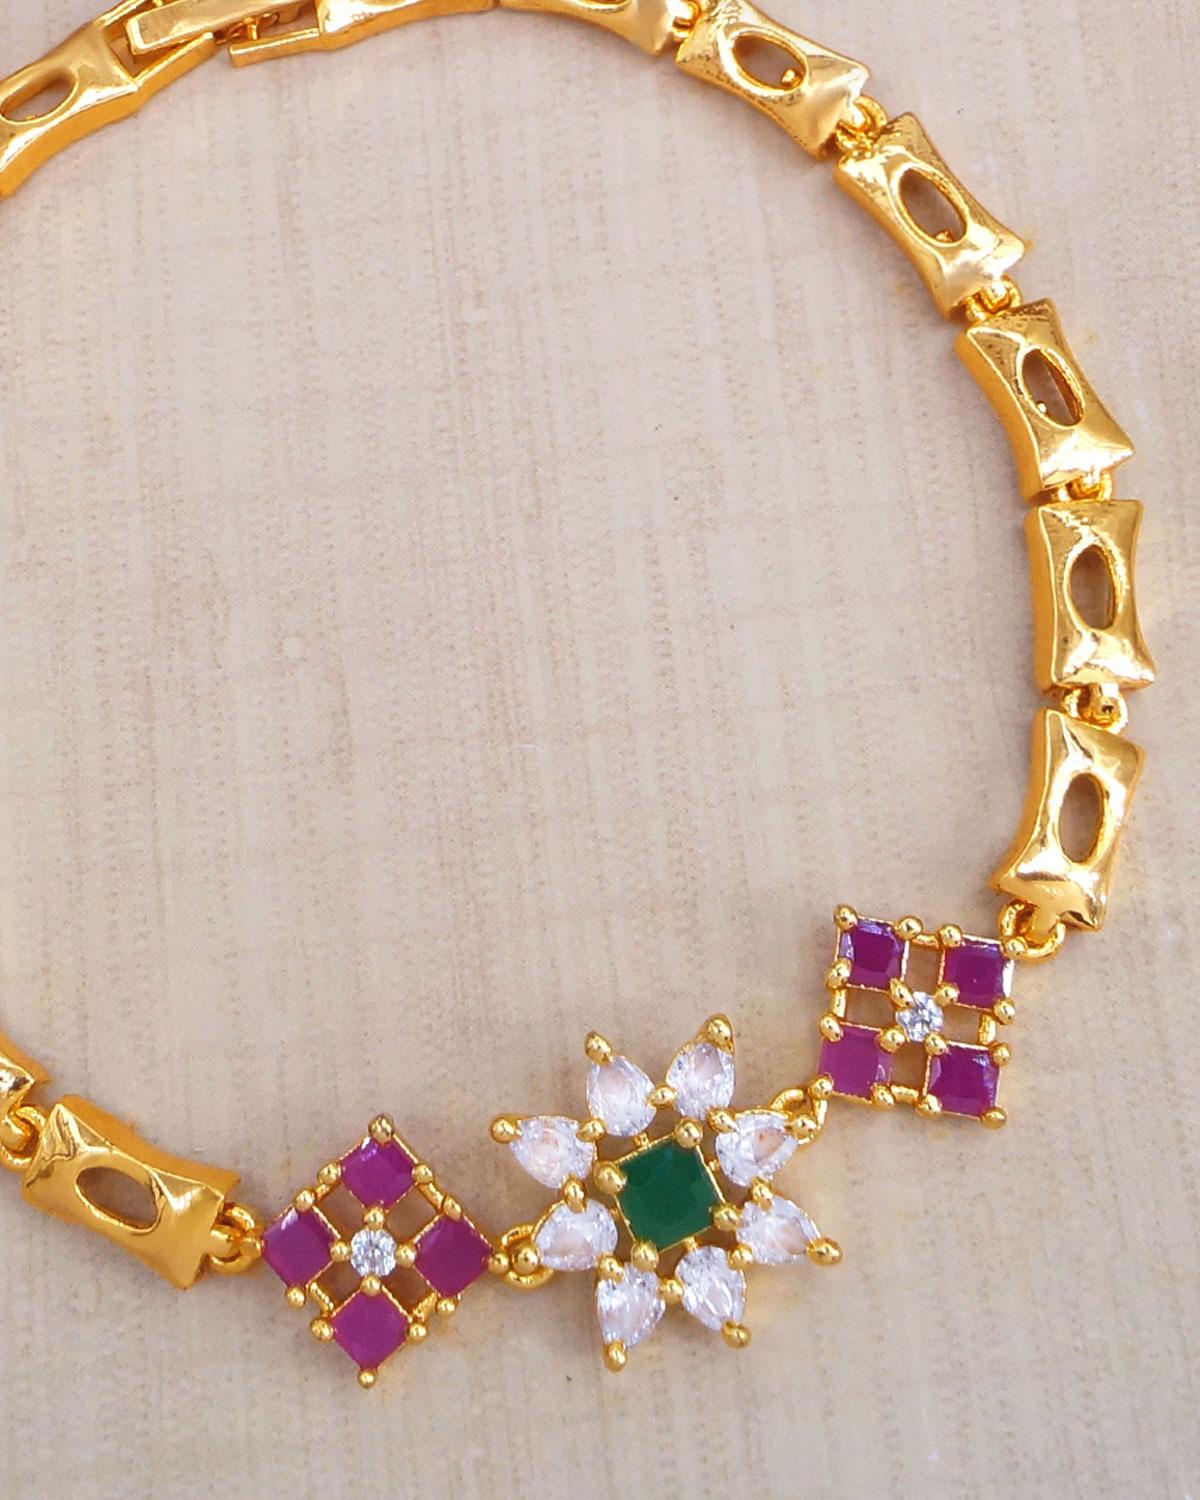 Ruby White Emerald Stone Chain Type Bracelet For Women